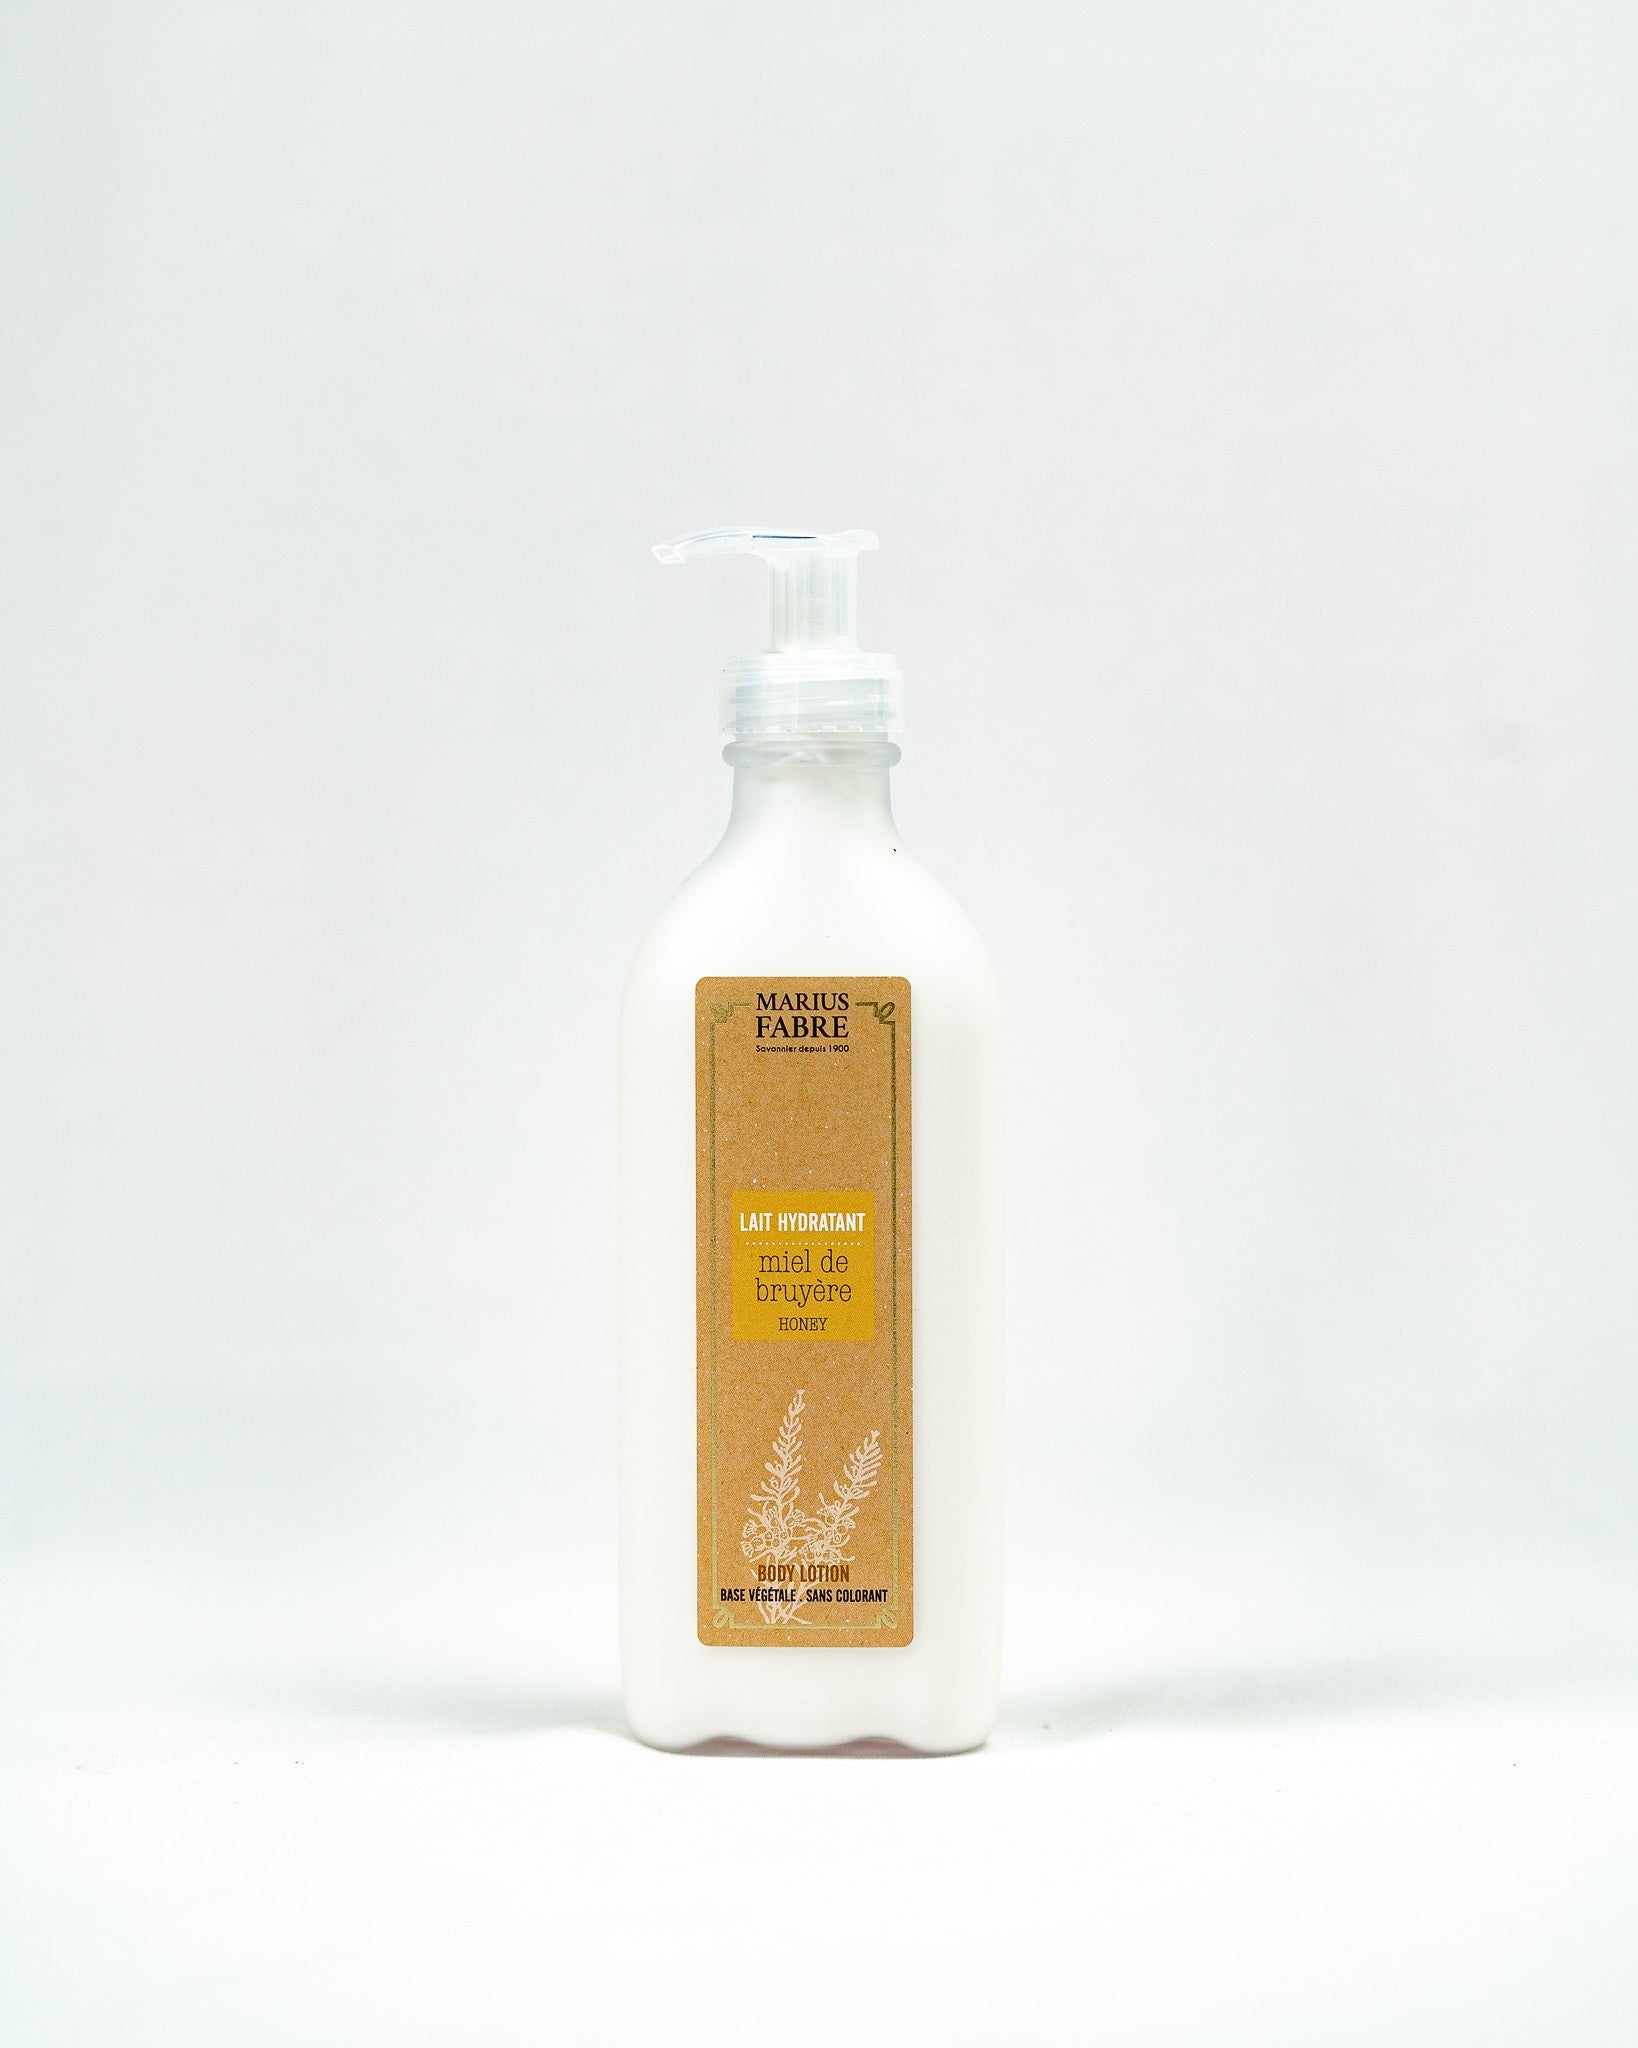 Moisturizing body lotion with heather honey scent 230ml